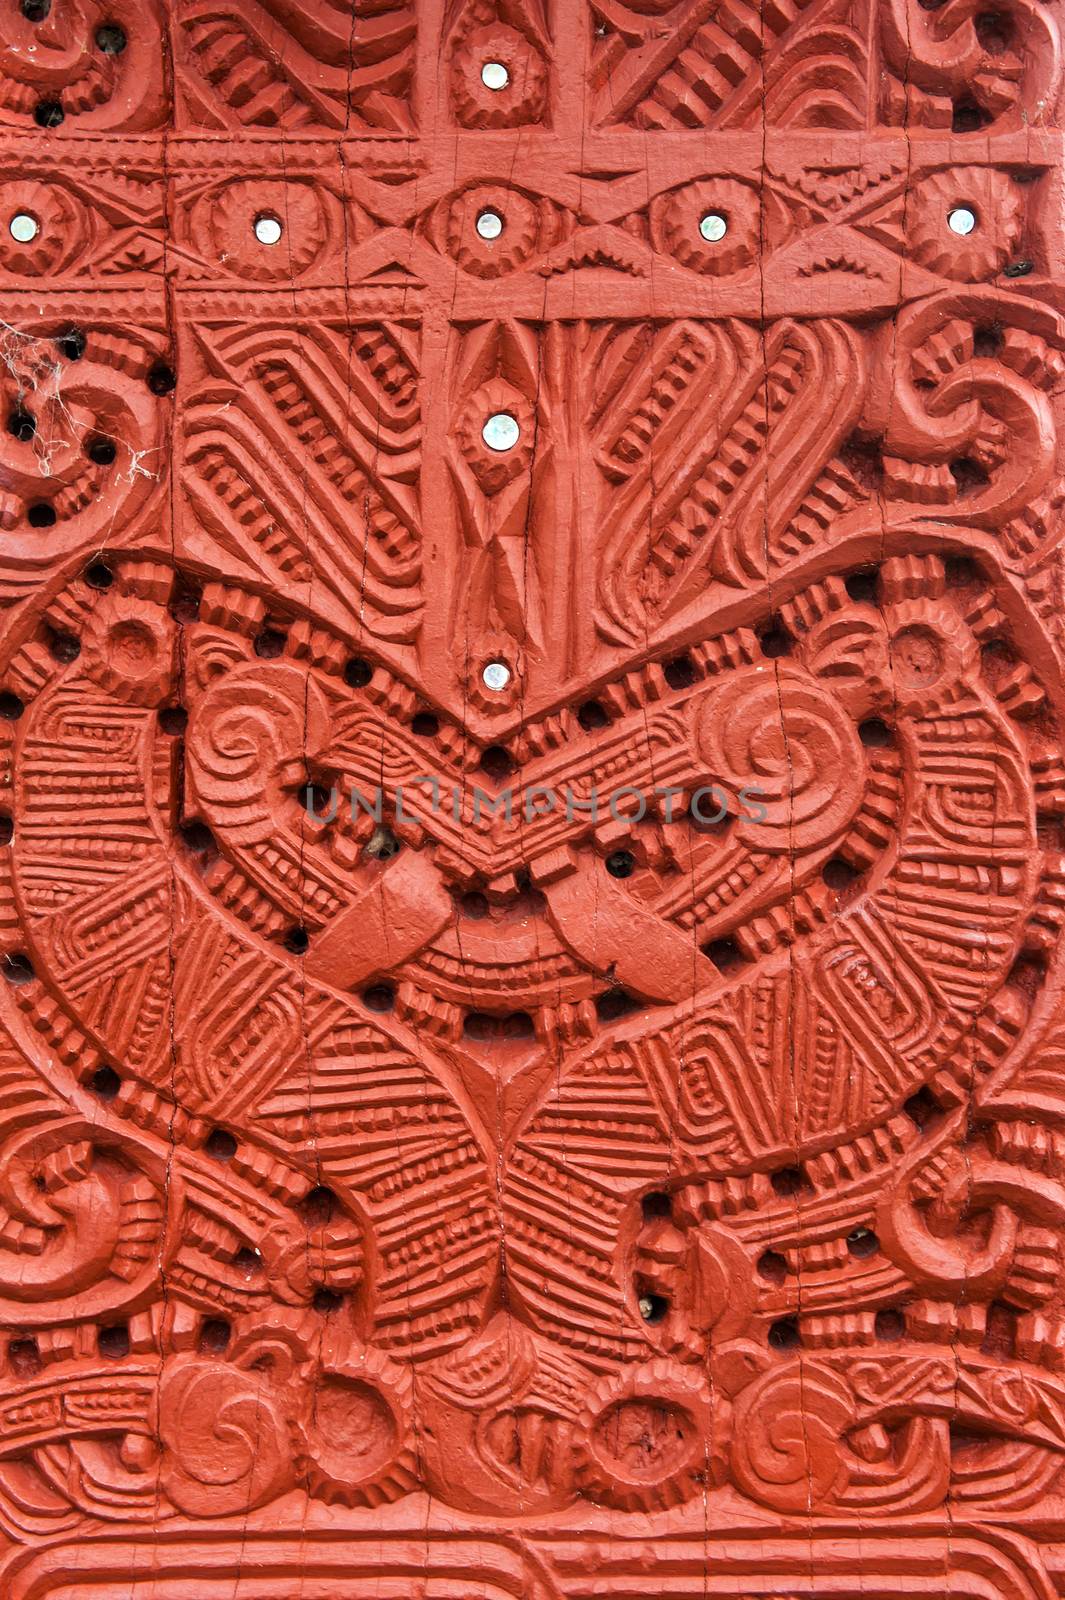 Detail of an old beautiful maori carving, Rotorua, New Zealand